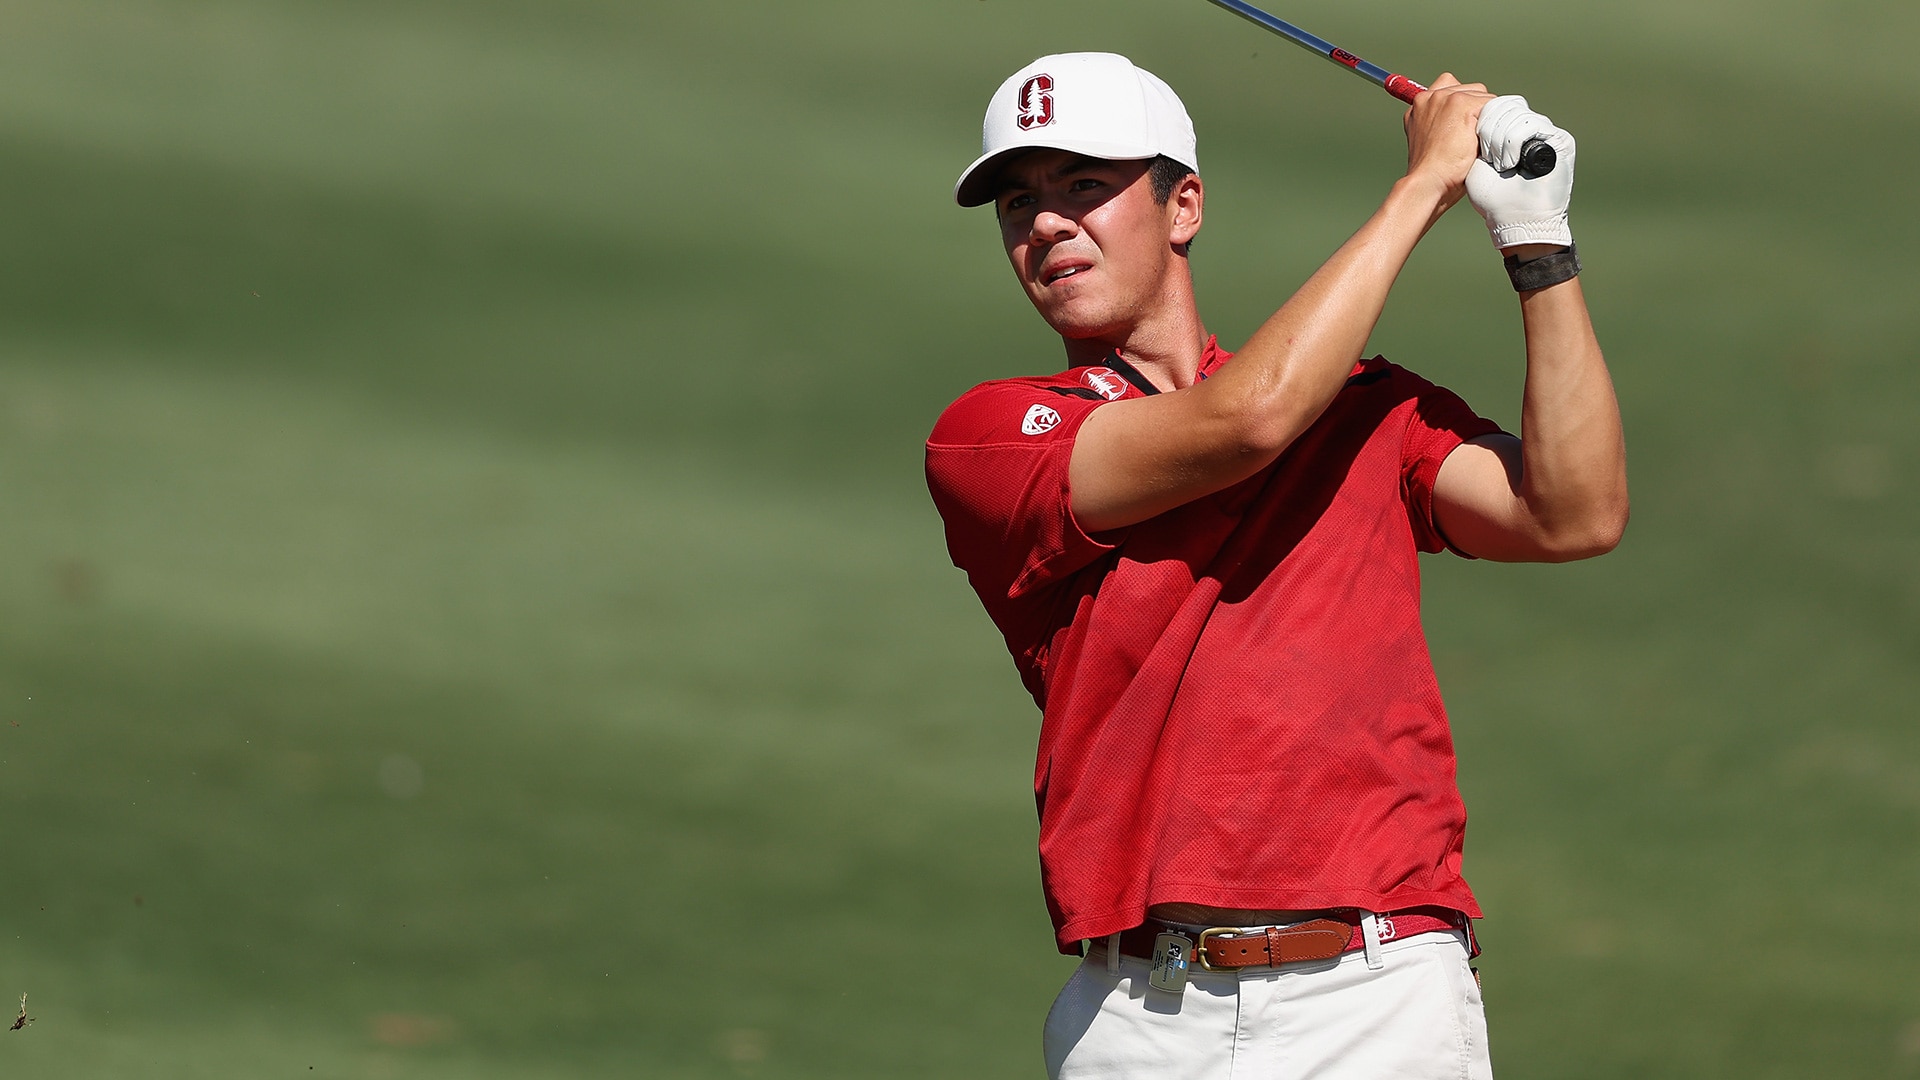 Stanford’s Michael Thorbjornsen debuts at No. 1 in new PGA Tour University ranking